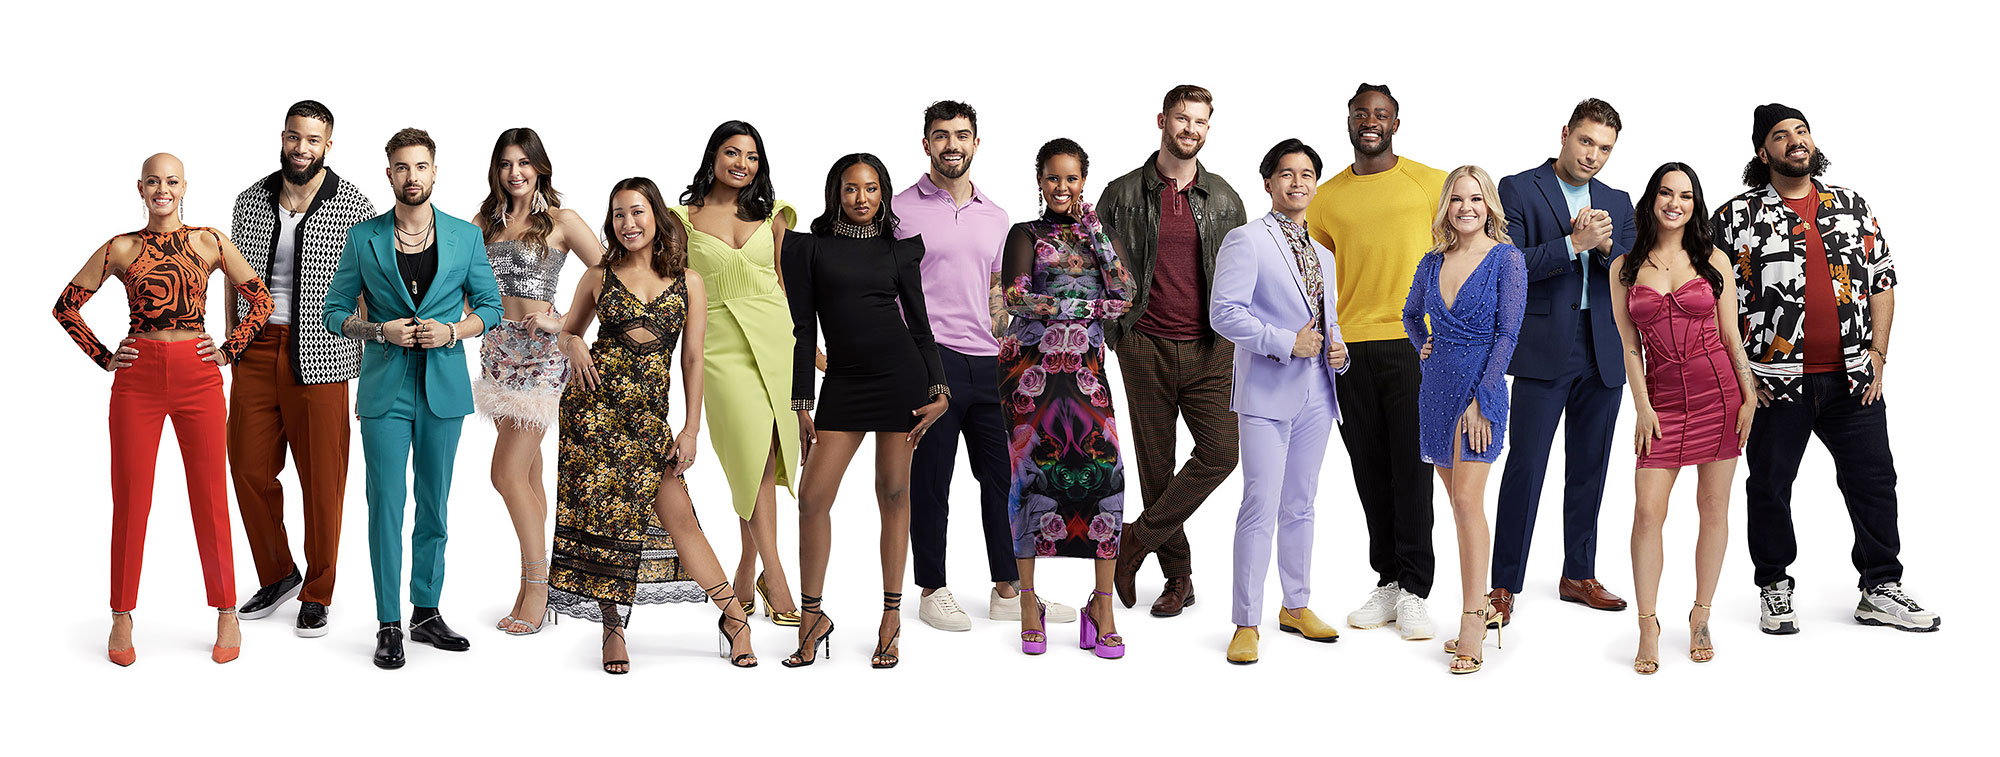 ‘Big Brother Canada’ Season 11 Cast Revealed Photos and Bios